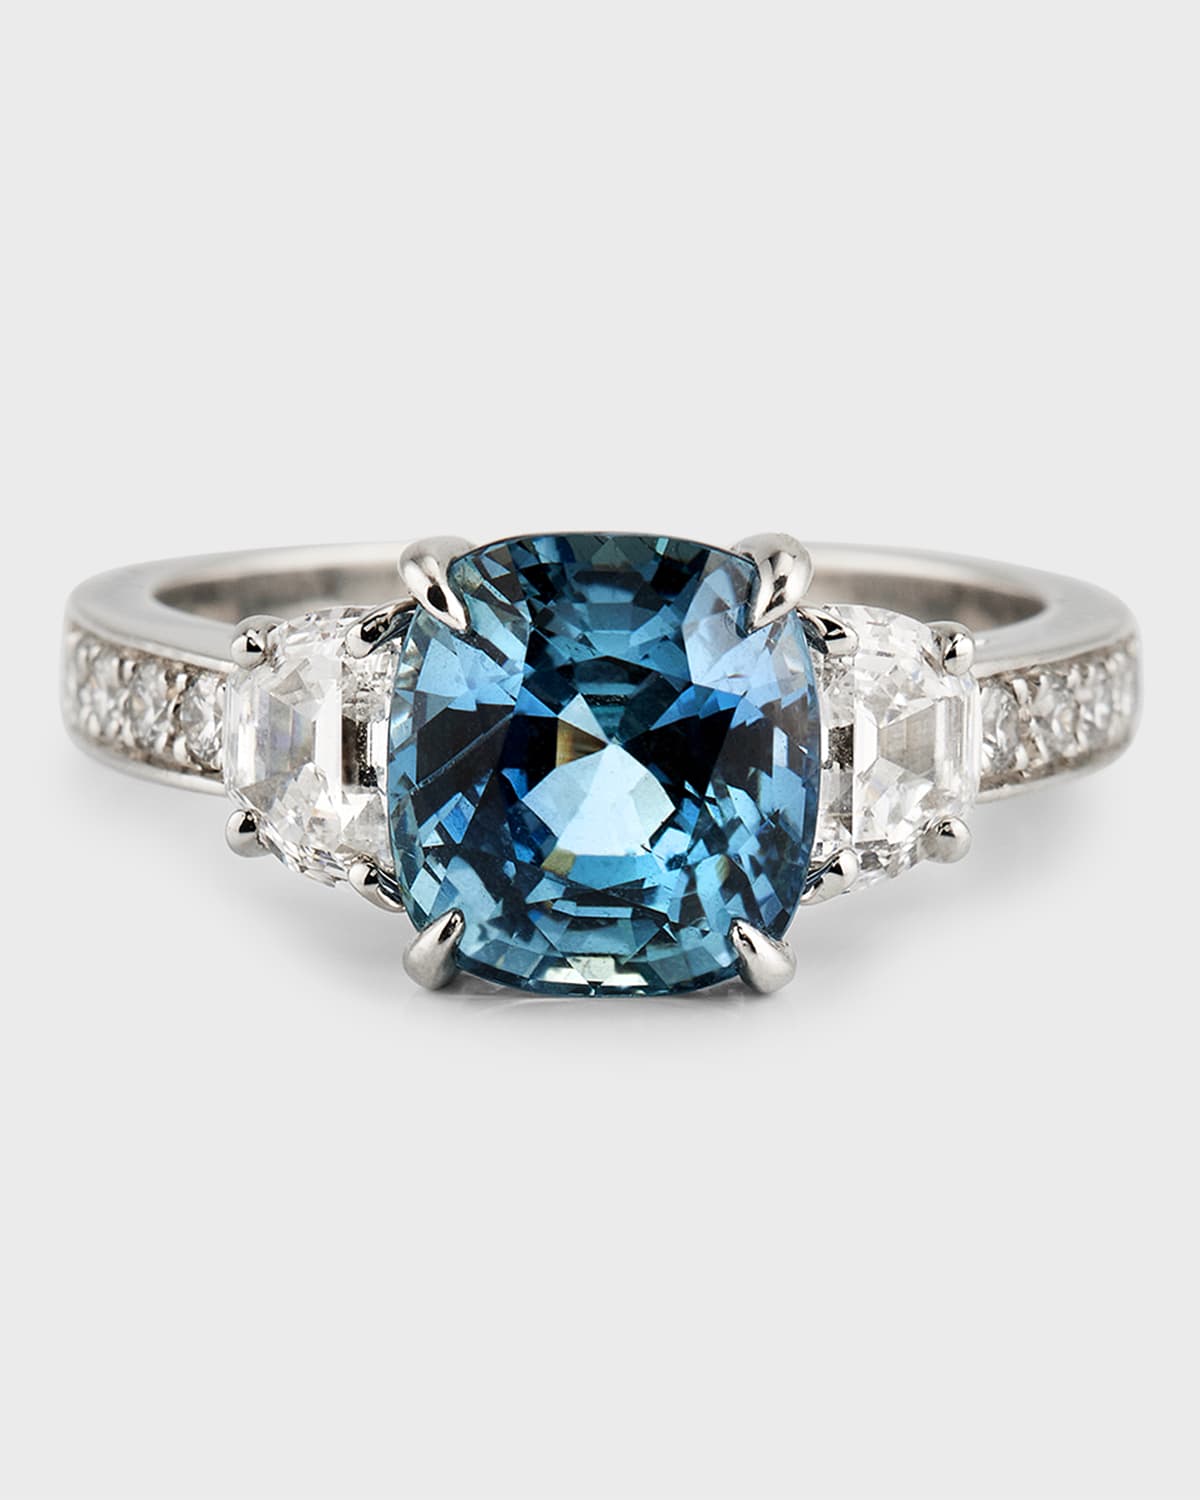 Platinum Natural Burmese Light Blue Sapphire Ring with Diamonds, Size 7